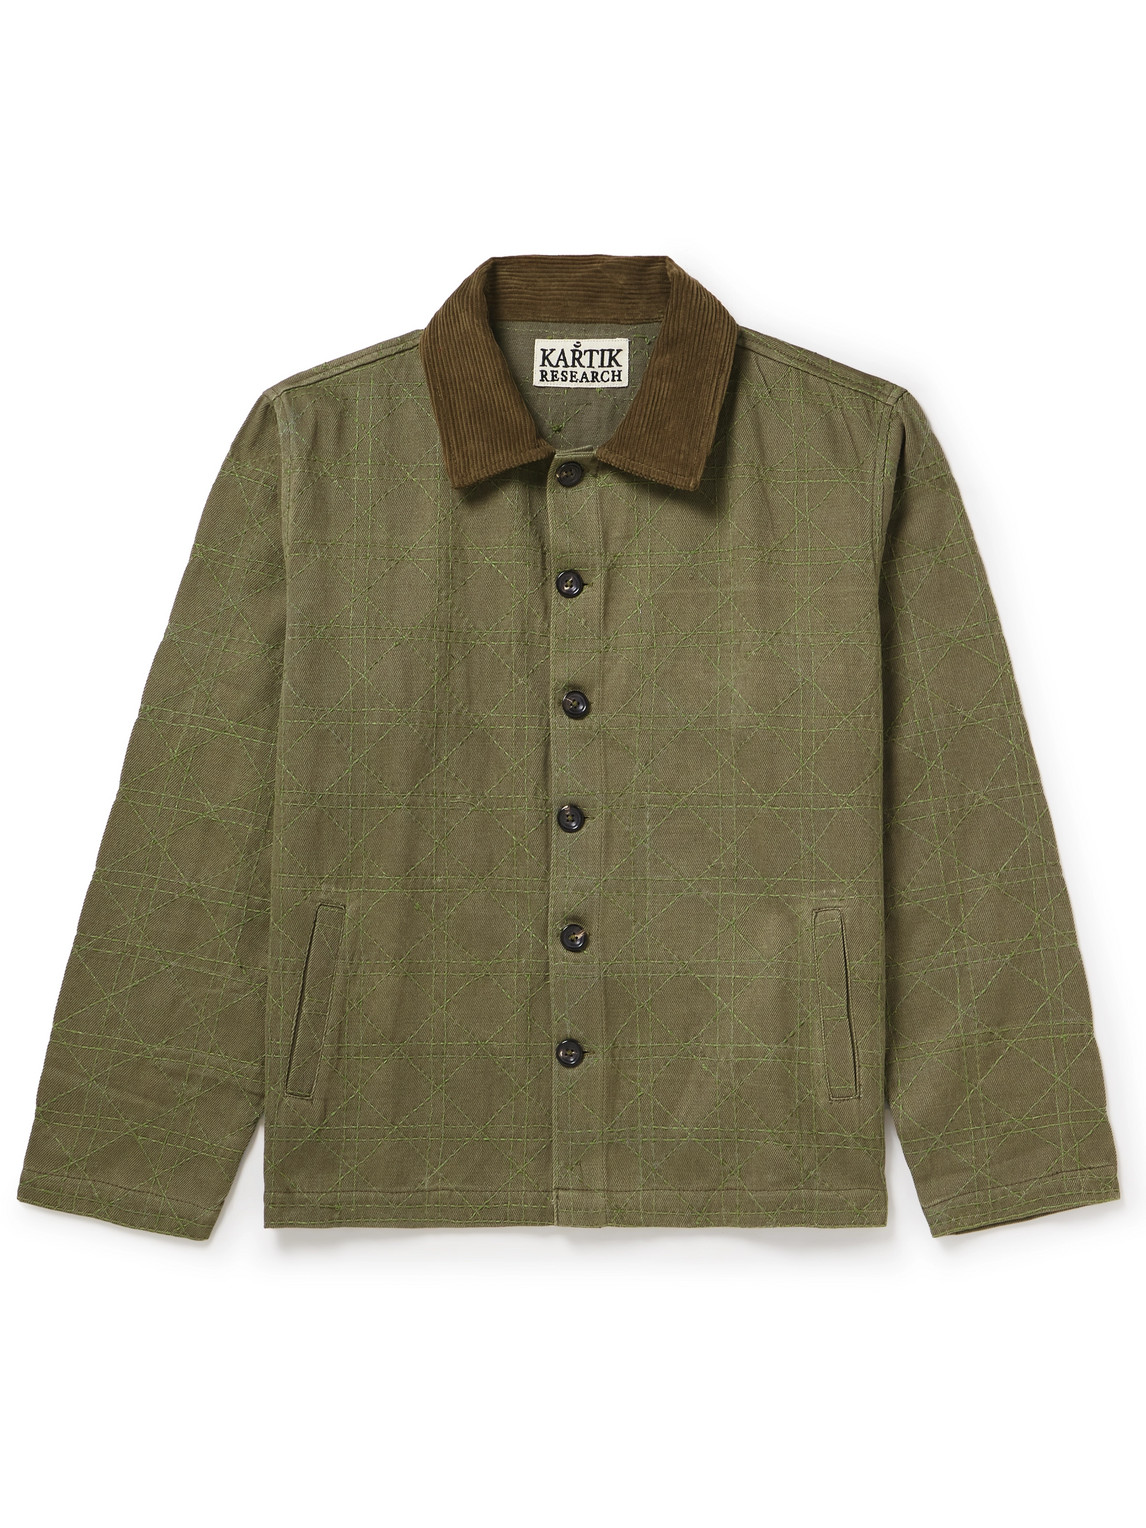 Kartik Research - Cropped Corduroy-Trimmed Embroidered Cotton-Canvas Jacket - Men - Green - M von Kartik Research